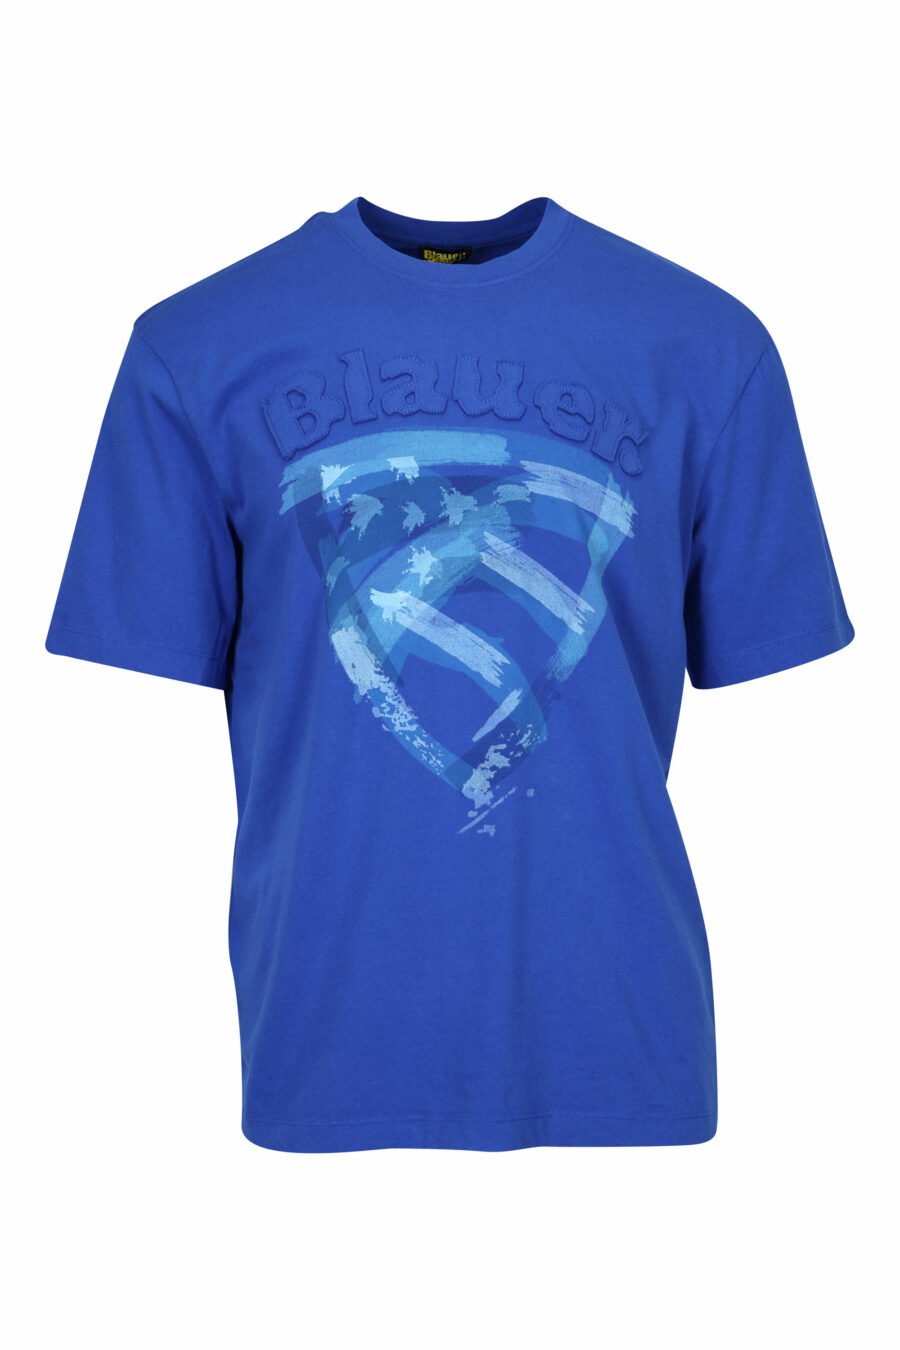 T-shirt bleu avec bouclier usé maxilogo - 8058610830472